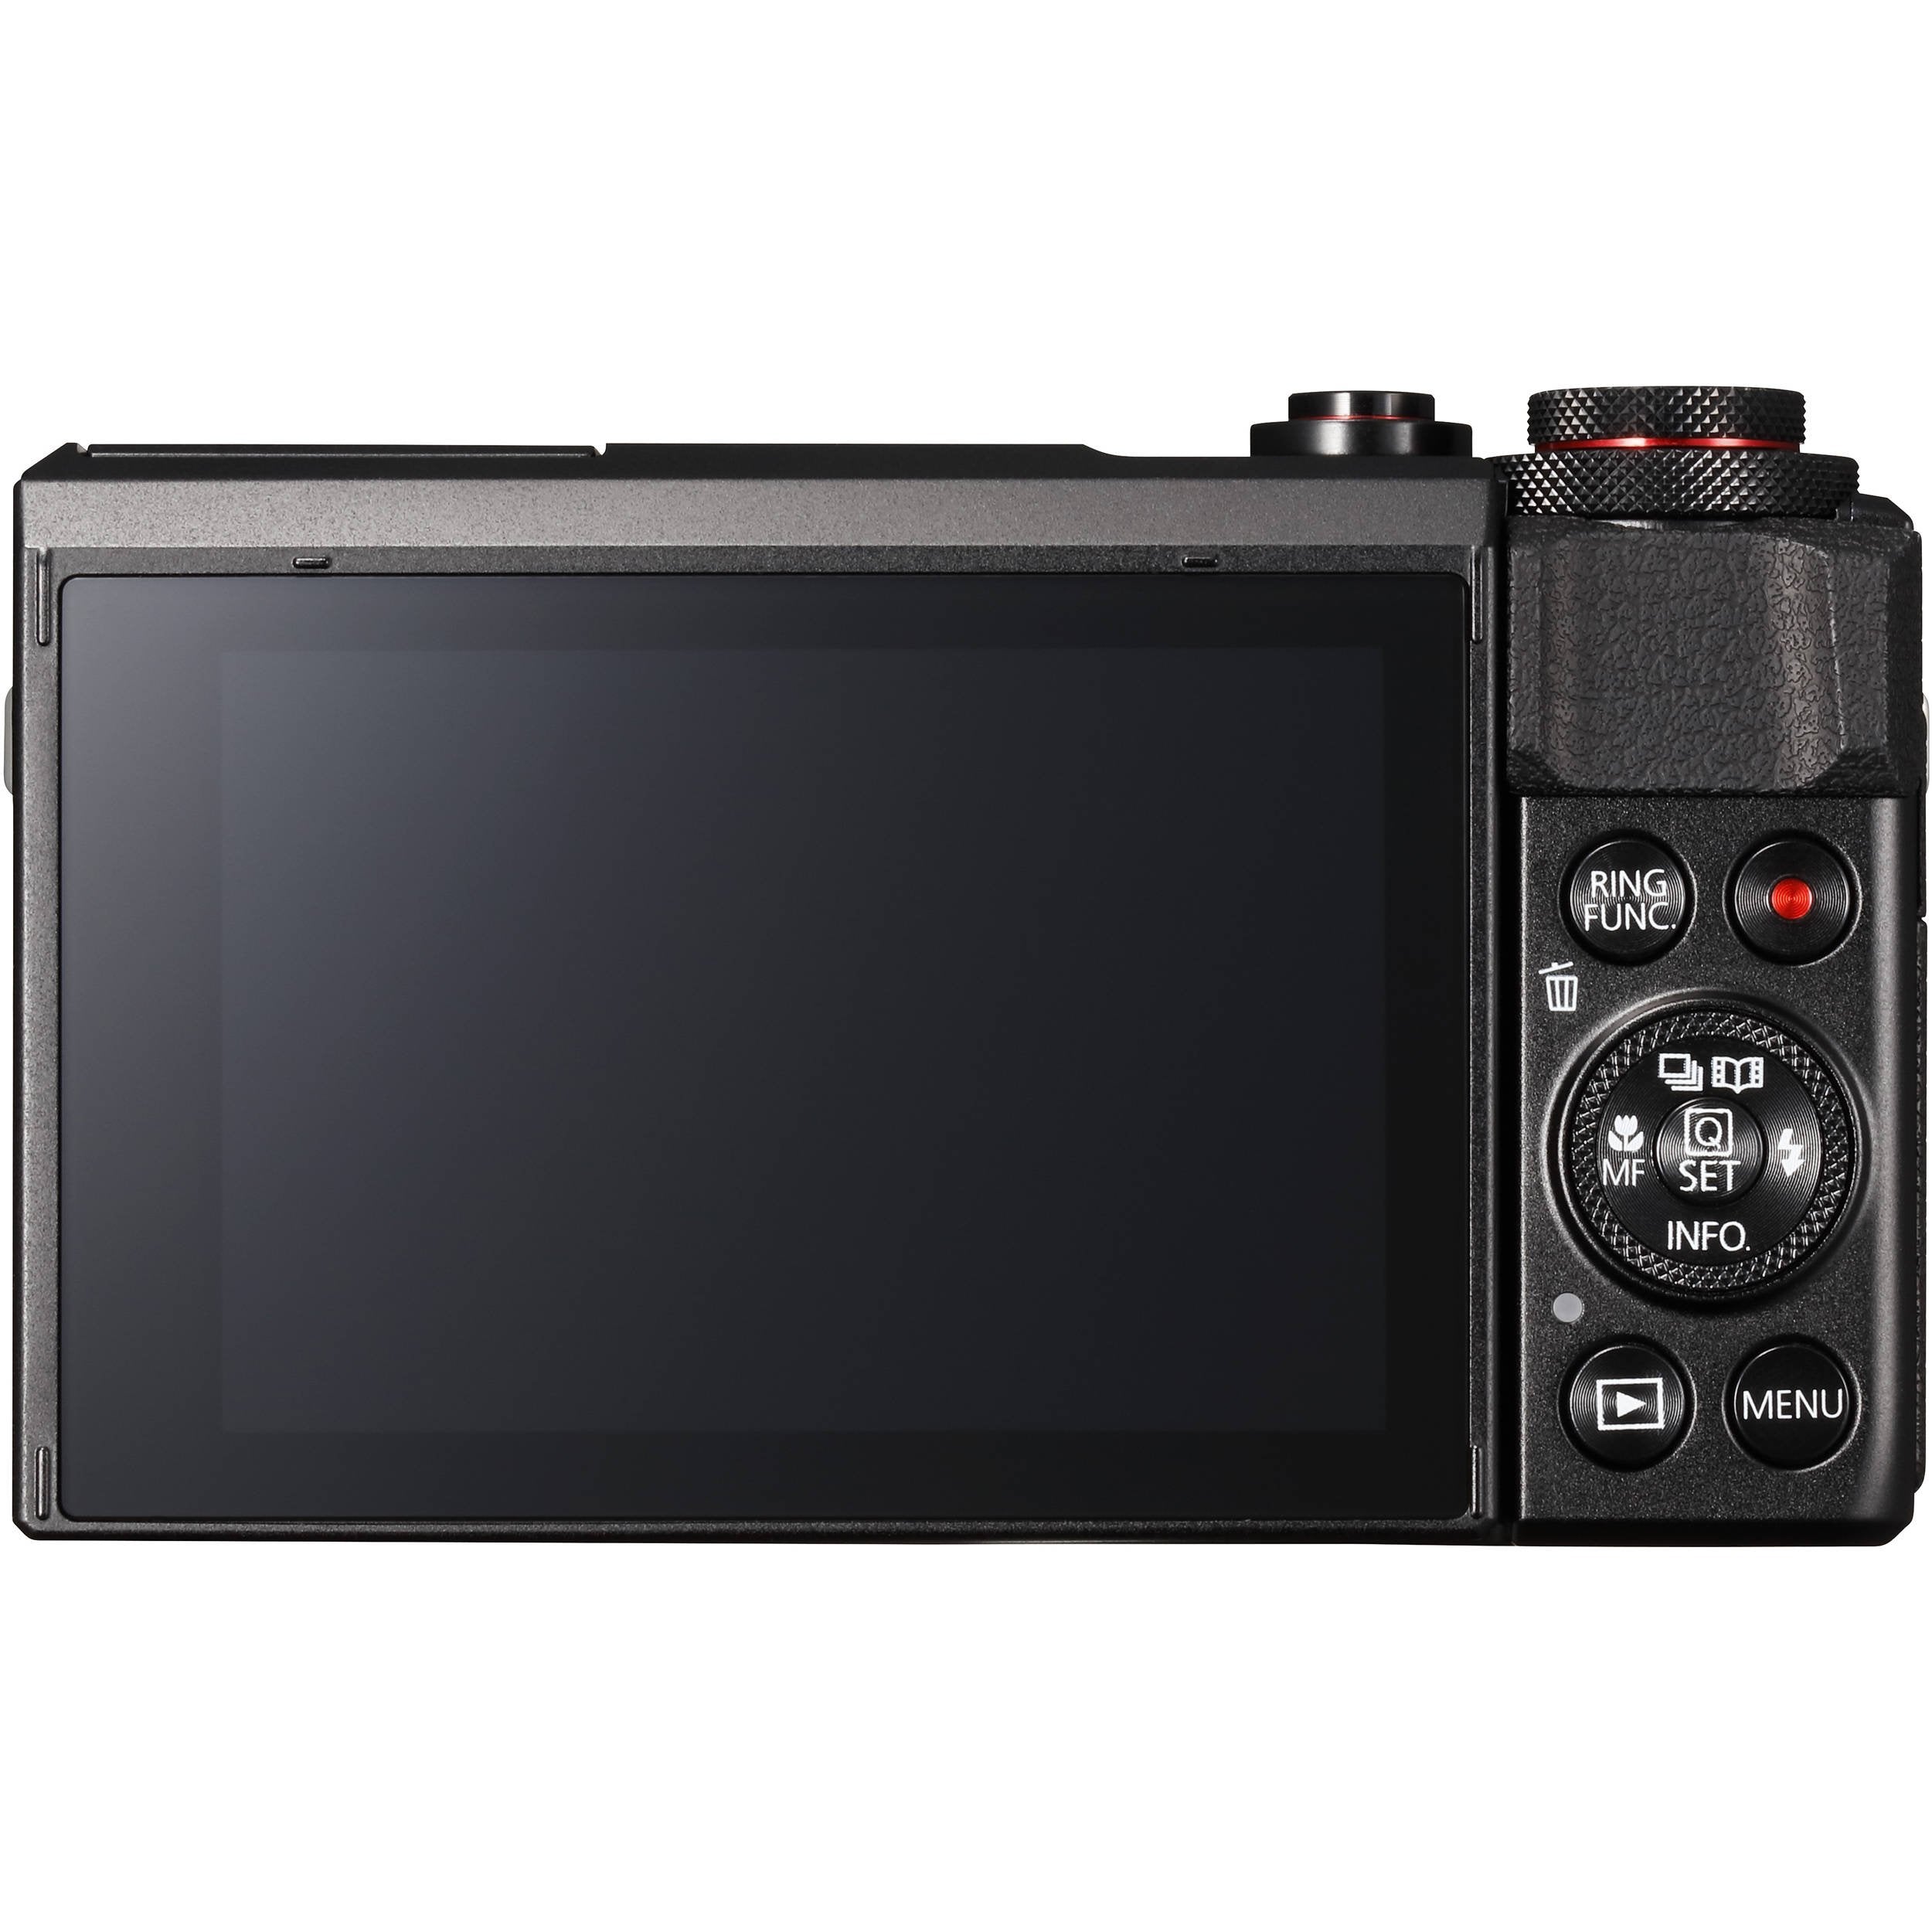 Canon PowerShot G7 X Mark II Digital Camera (Intl Model) - Kit